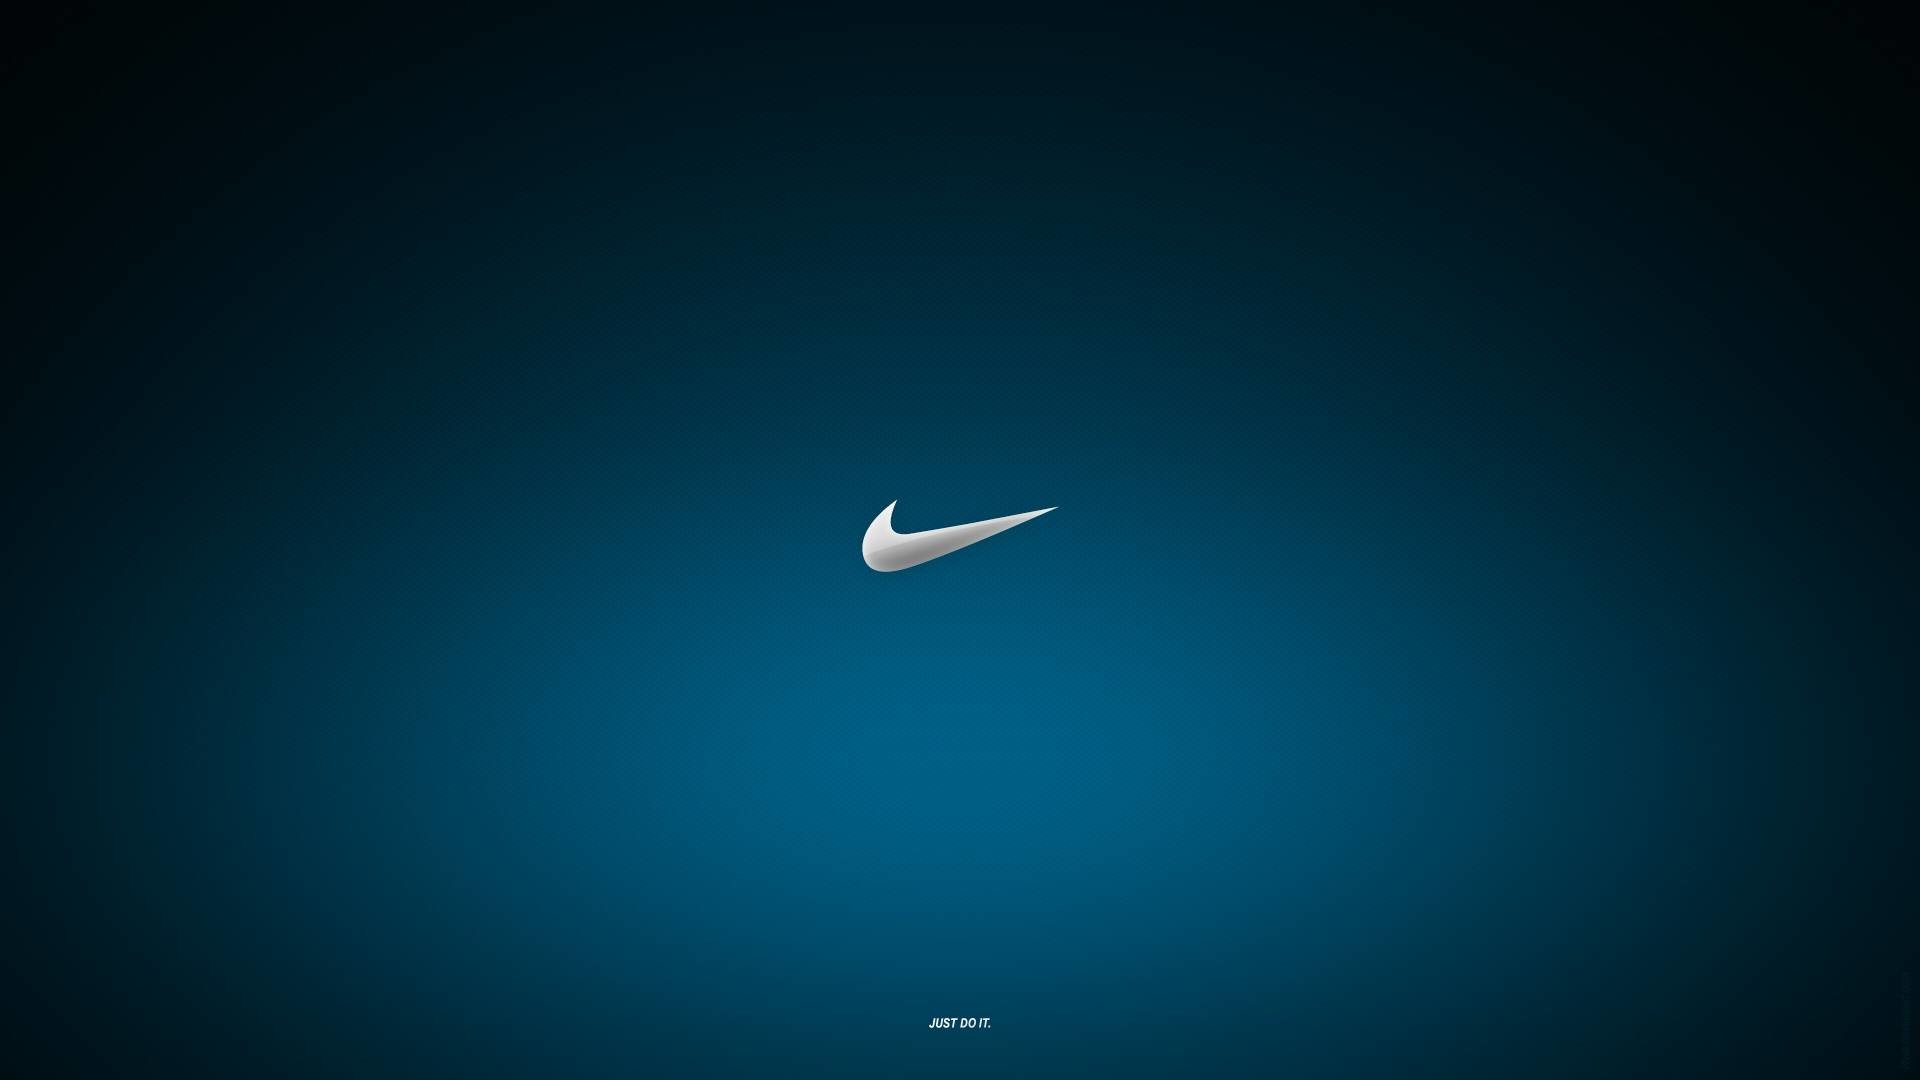 1920x1080 New stylish nike logo - Nike Wallpaper